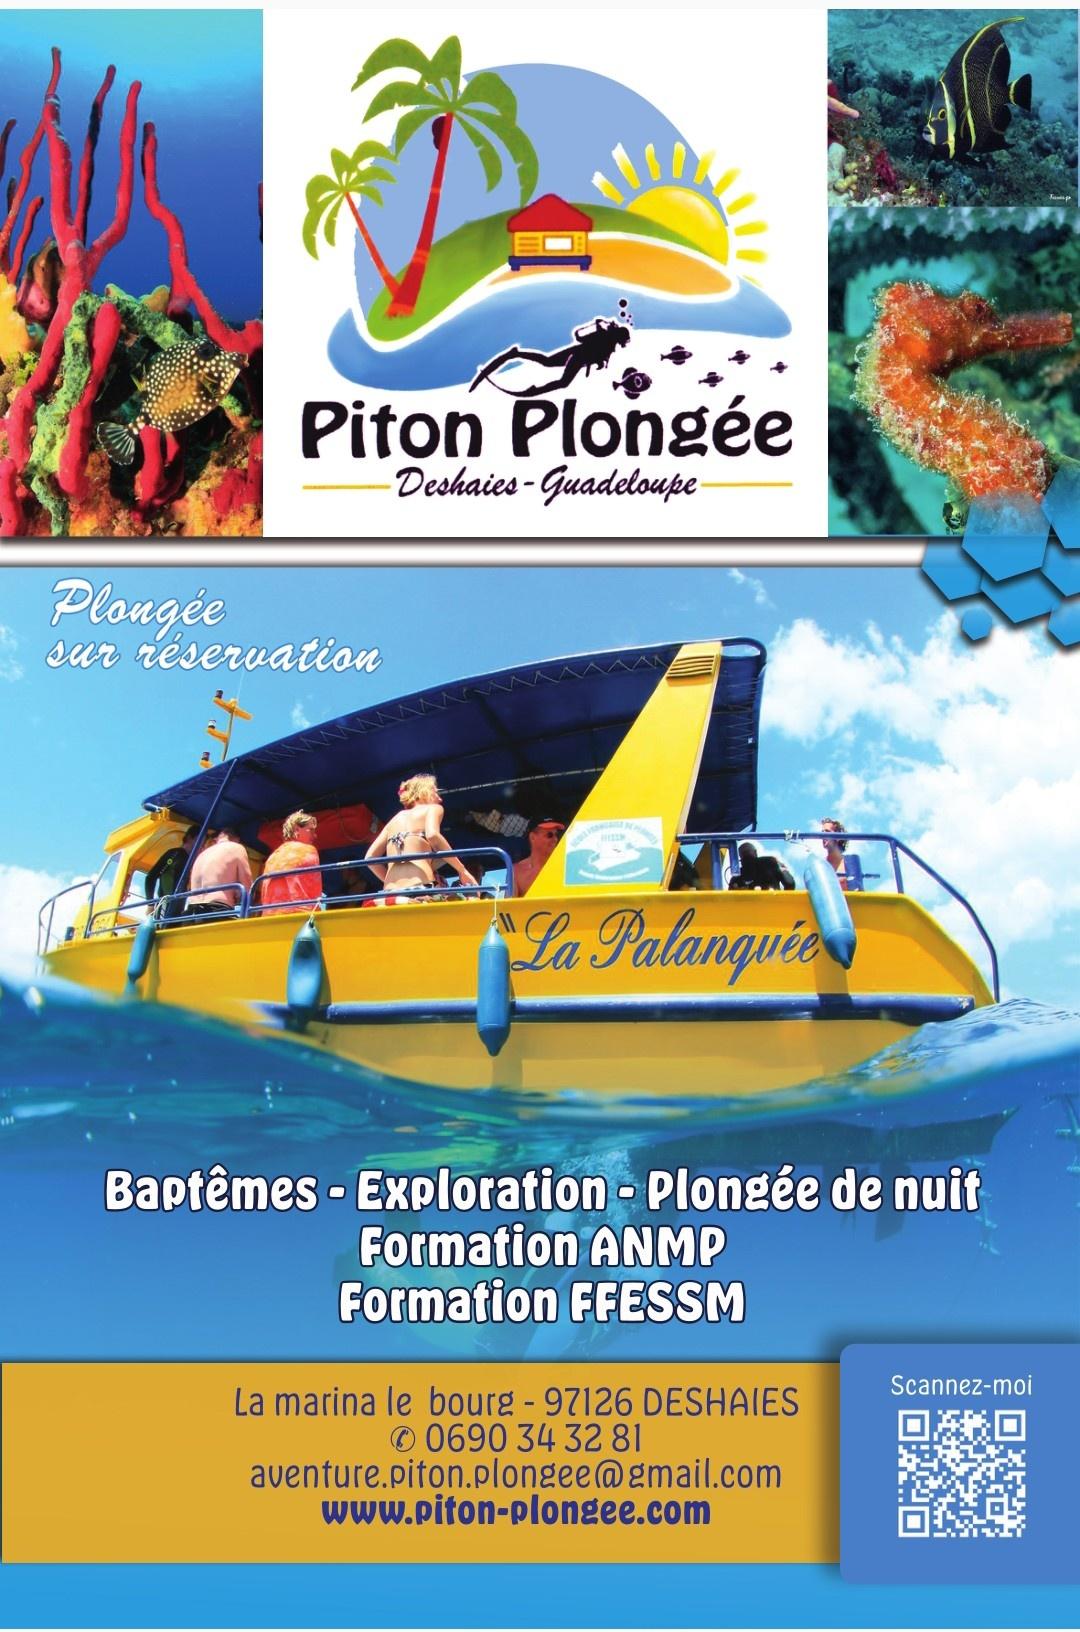 Piton Plongée - Guadeloupe  Deshaies